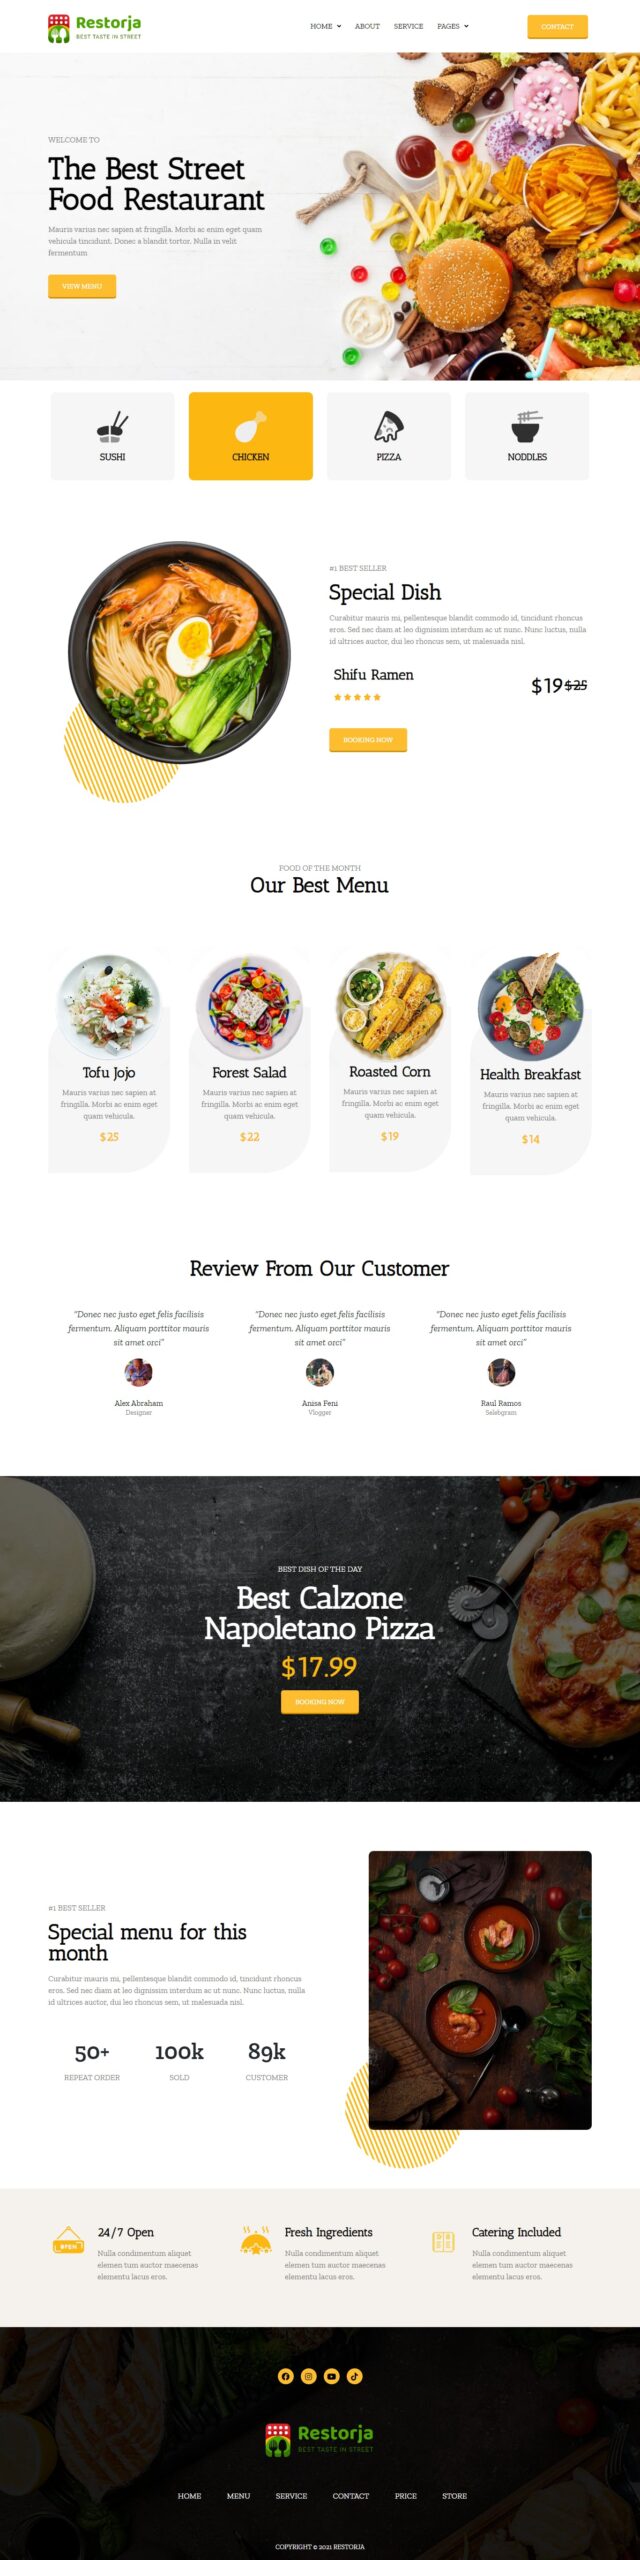 restaurant website02